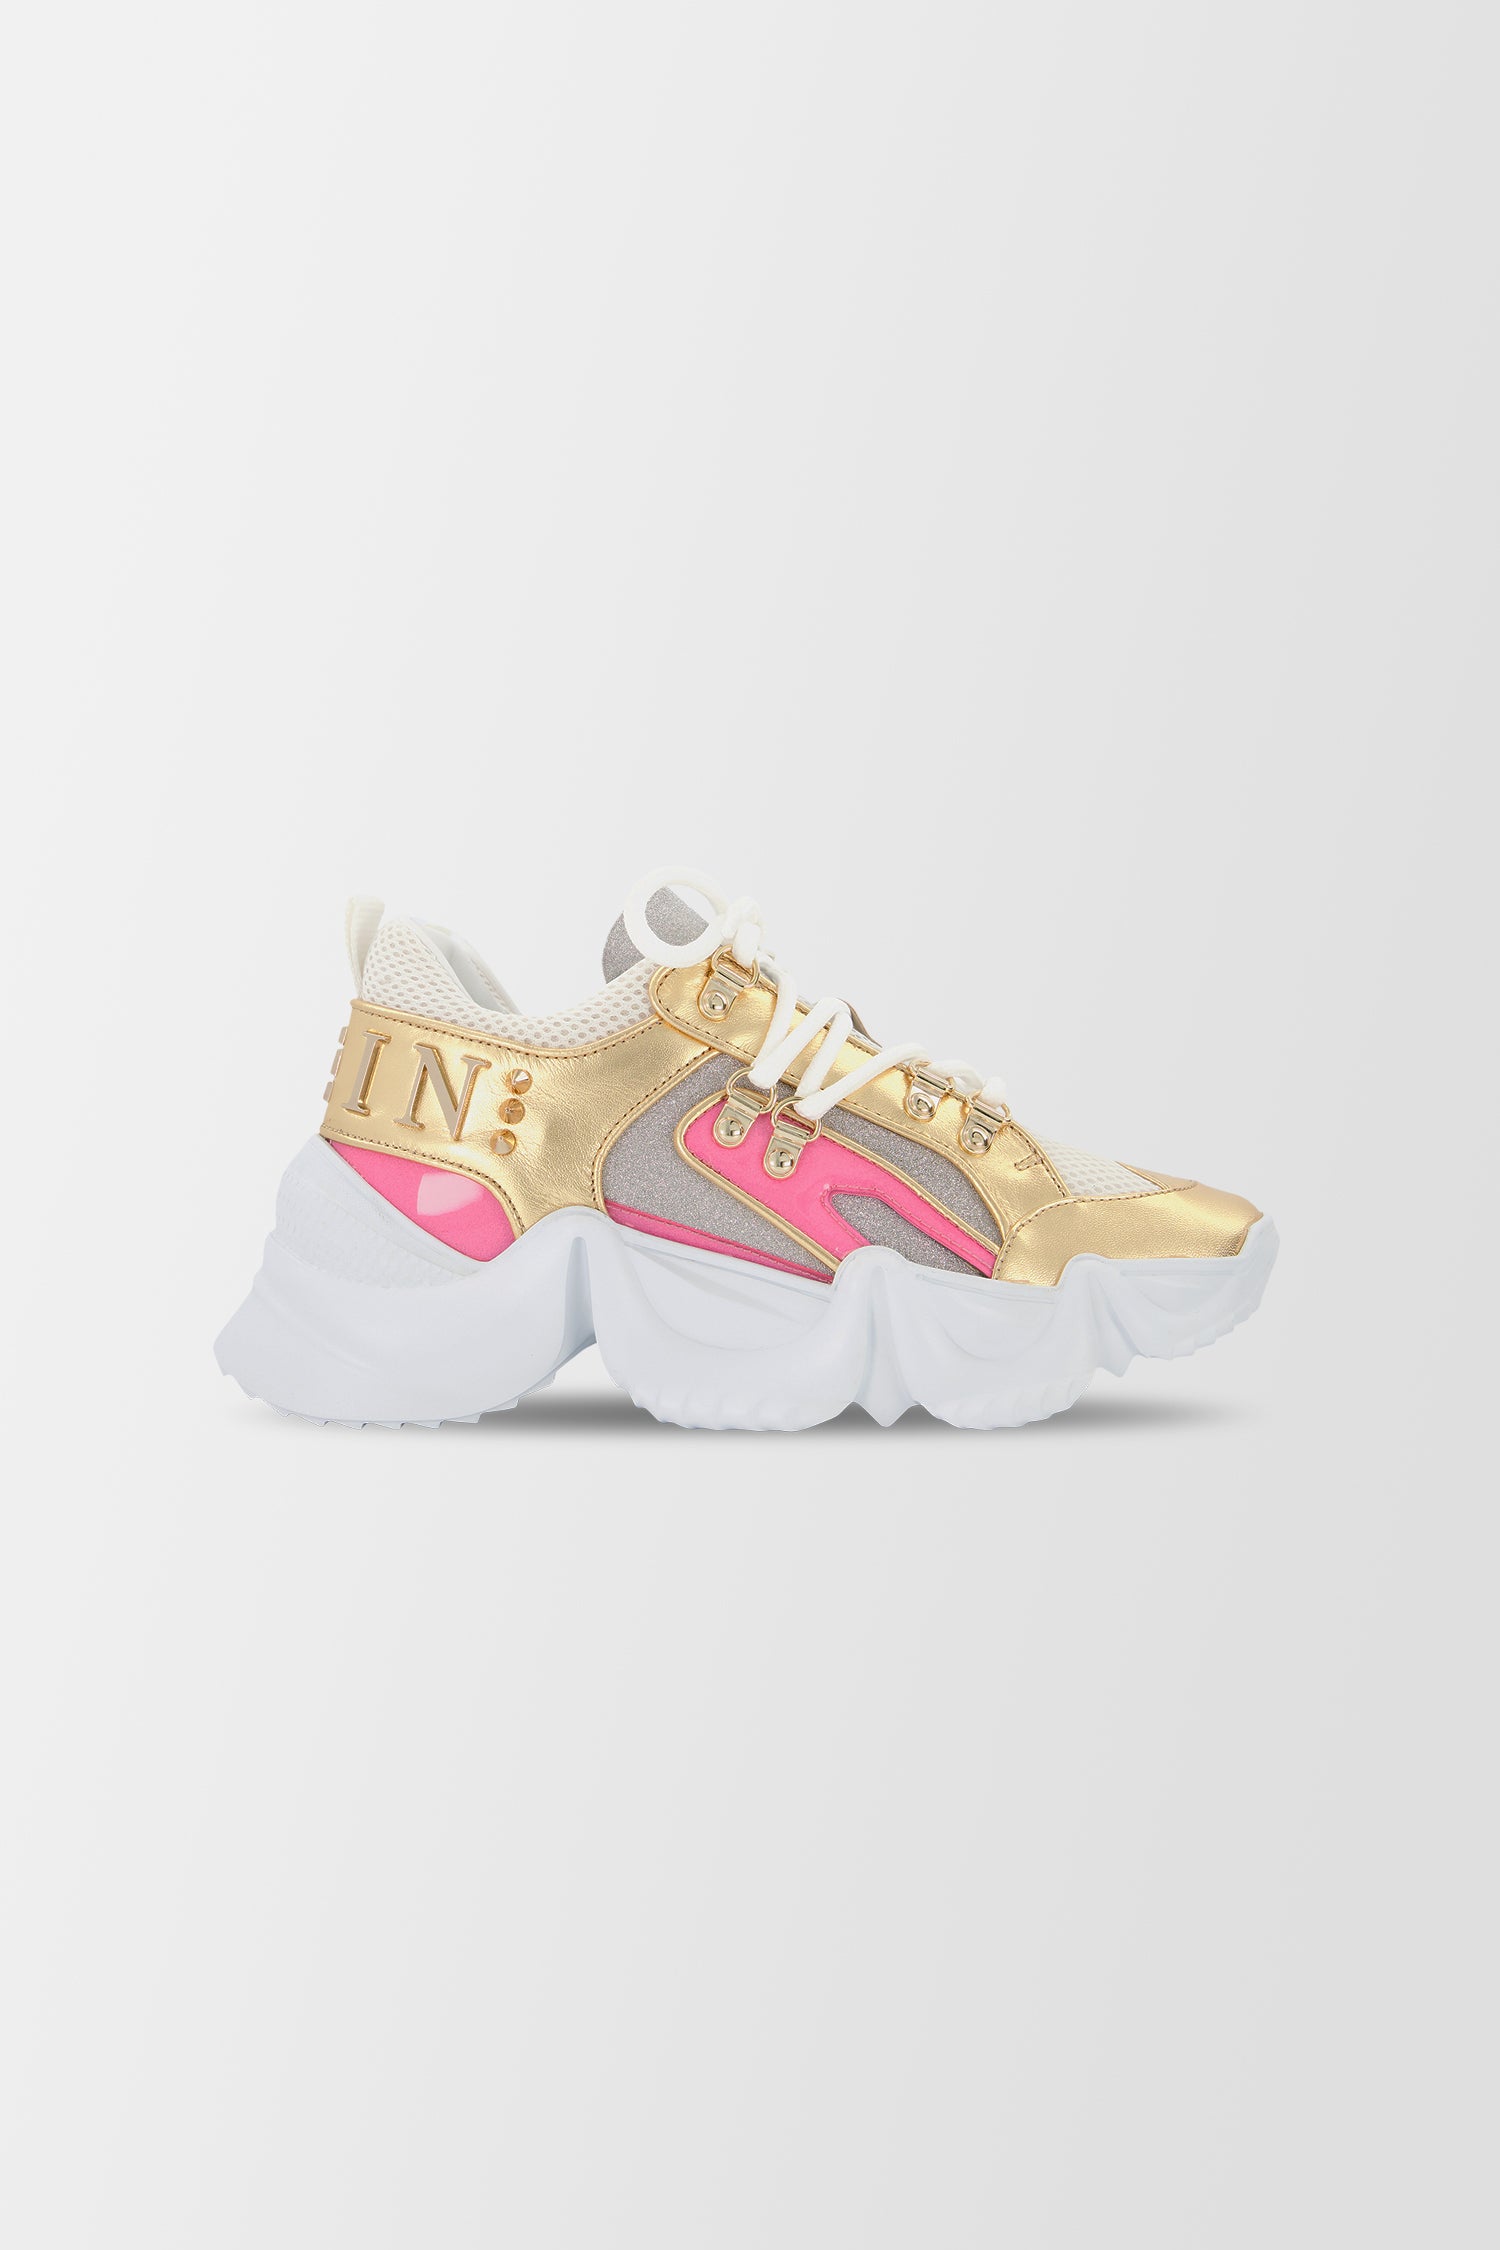 Philipp Plein Gold/Pink Crystal Sneakers